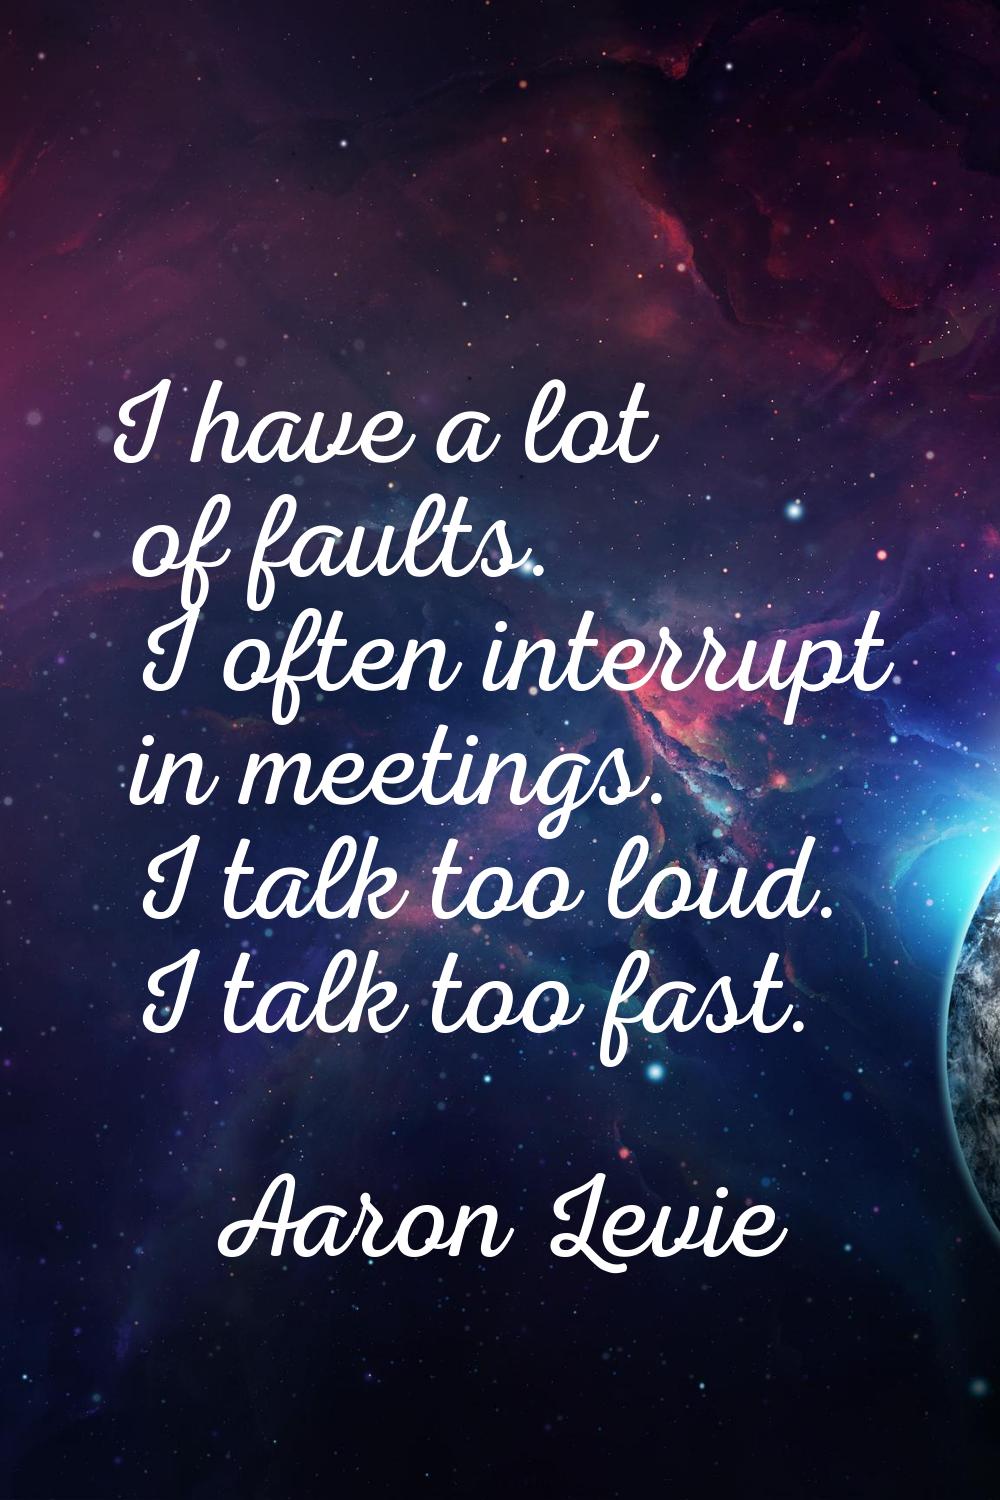 I have a lot of faults. I often interrupt in meetings. I talk too loud. I talk too fast.